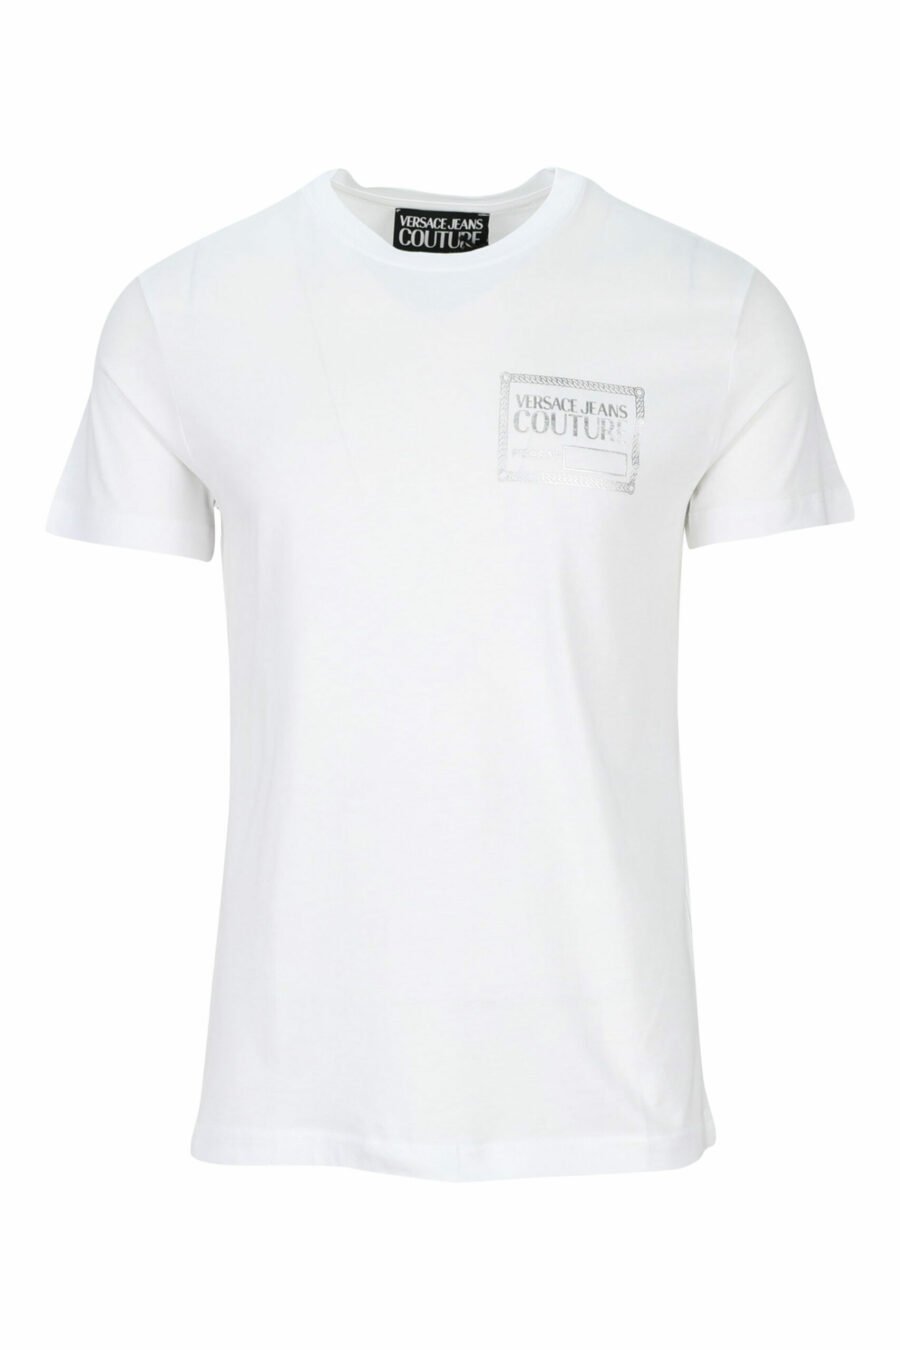 Camiseta blanca con minilogo "piece number" plateado - 8052019456936 scaled